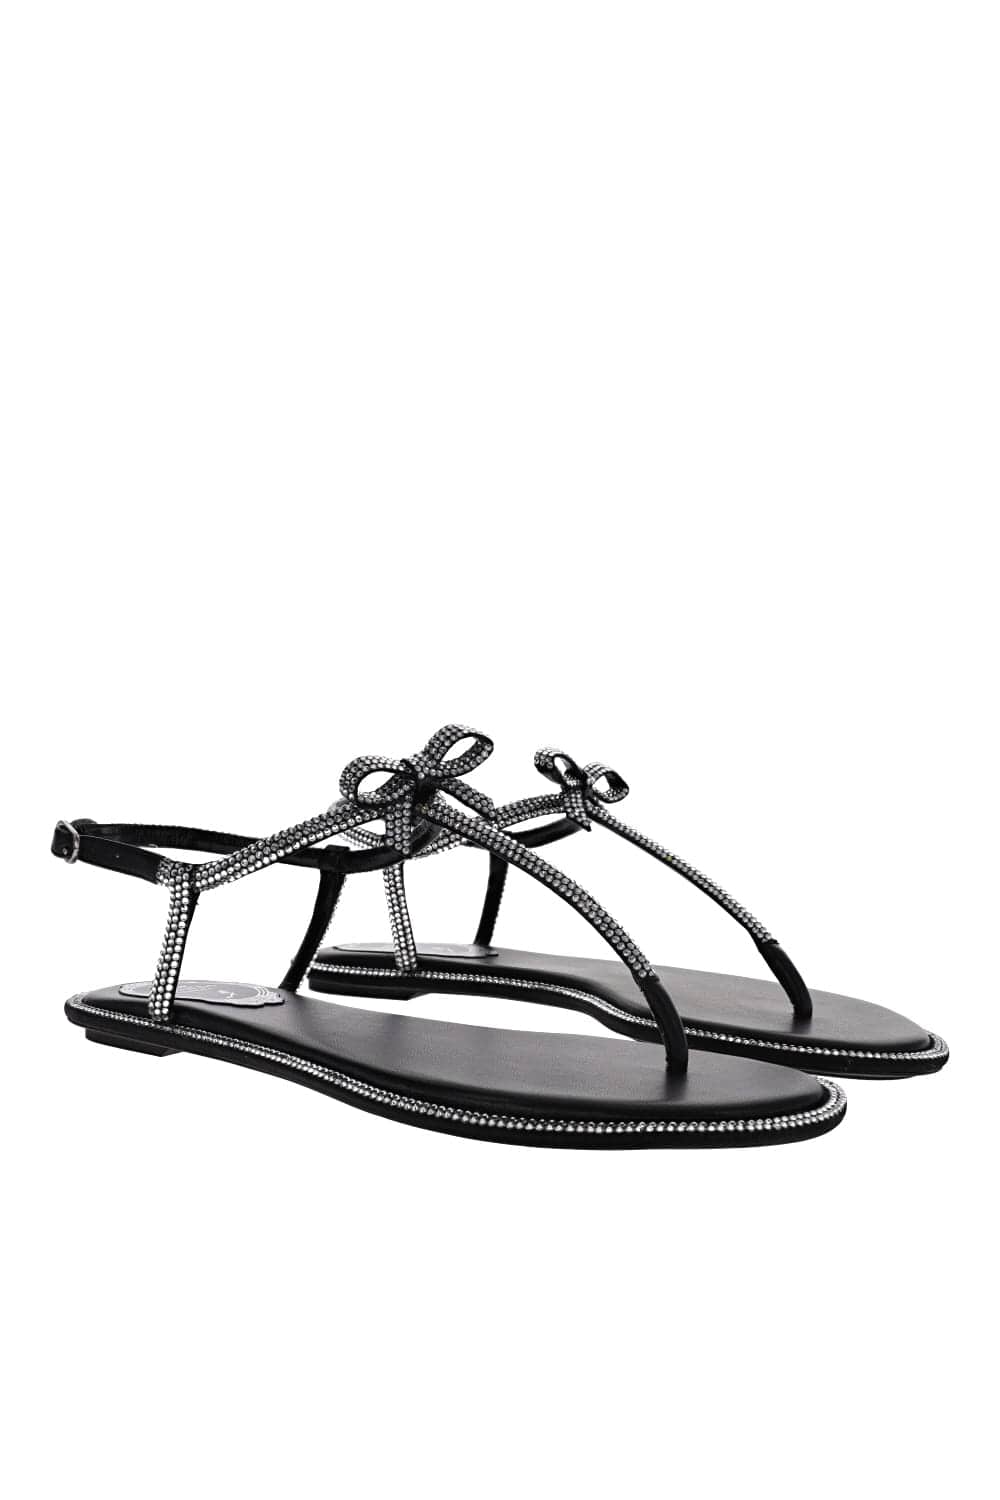 RENE CAOVILLA Black Crystal Bow Flat Sandal